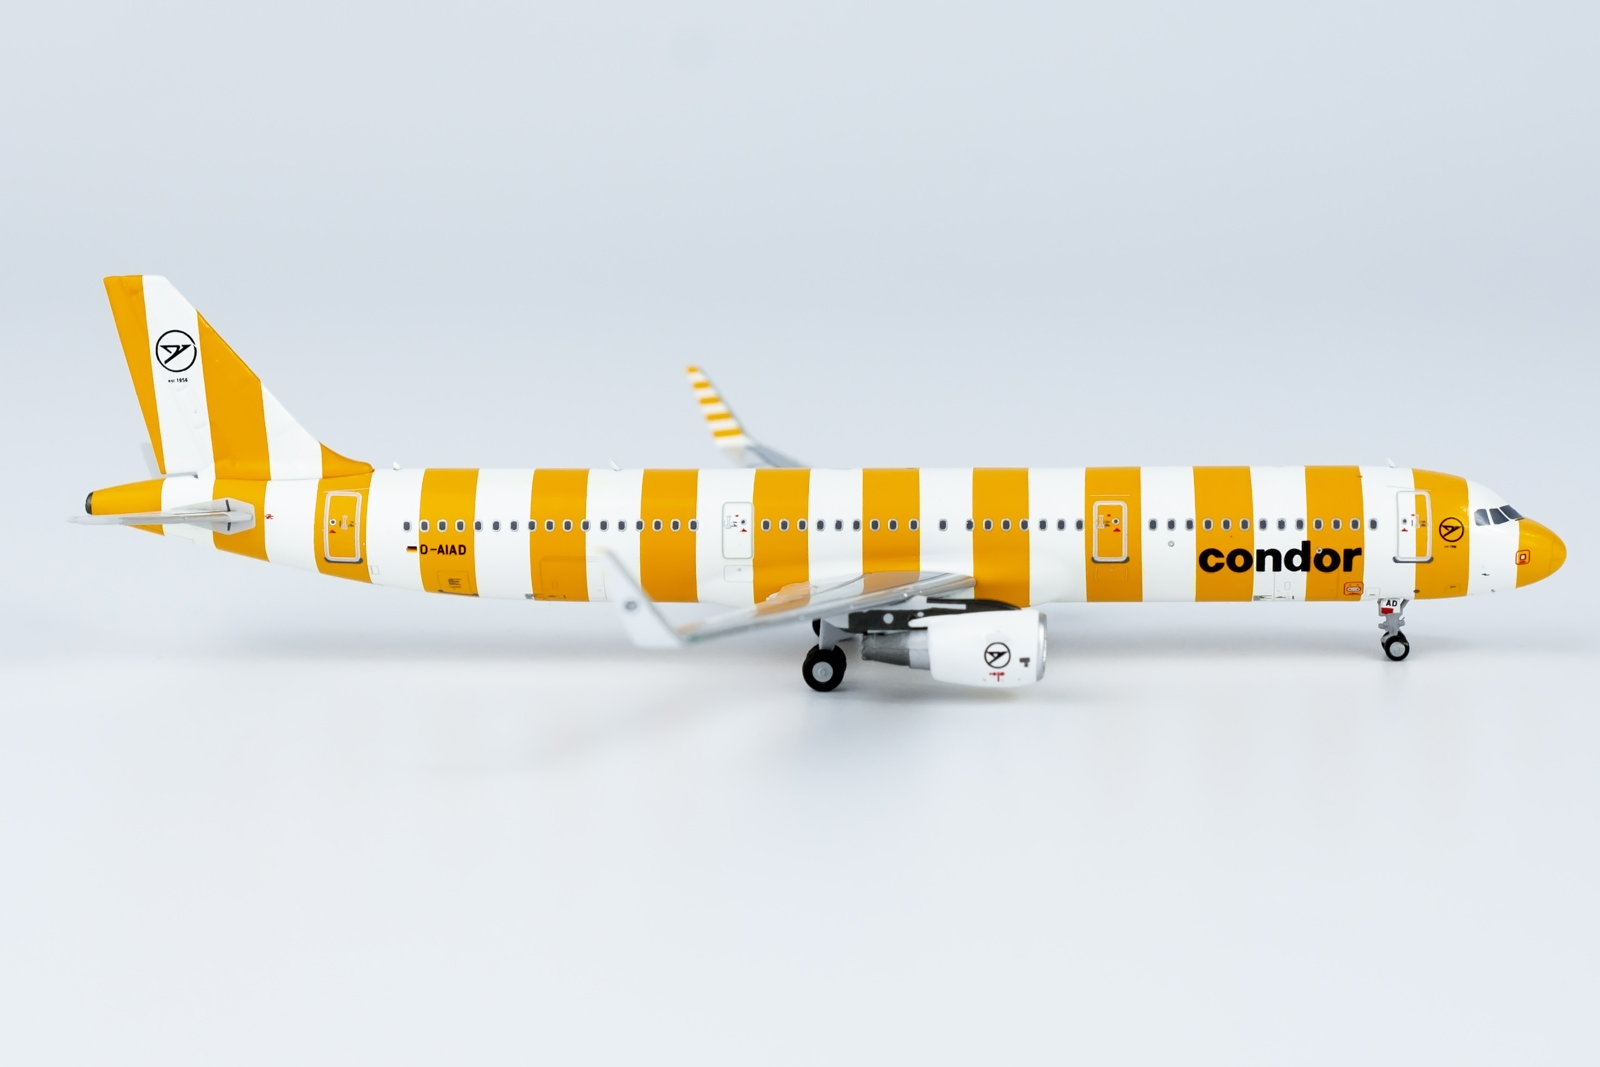 CONDOR AIRBUS A321-200 Safety Card CFG300019 10/2014 V.2.0 